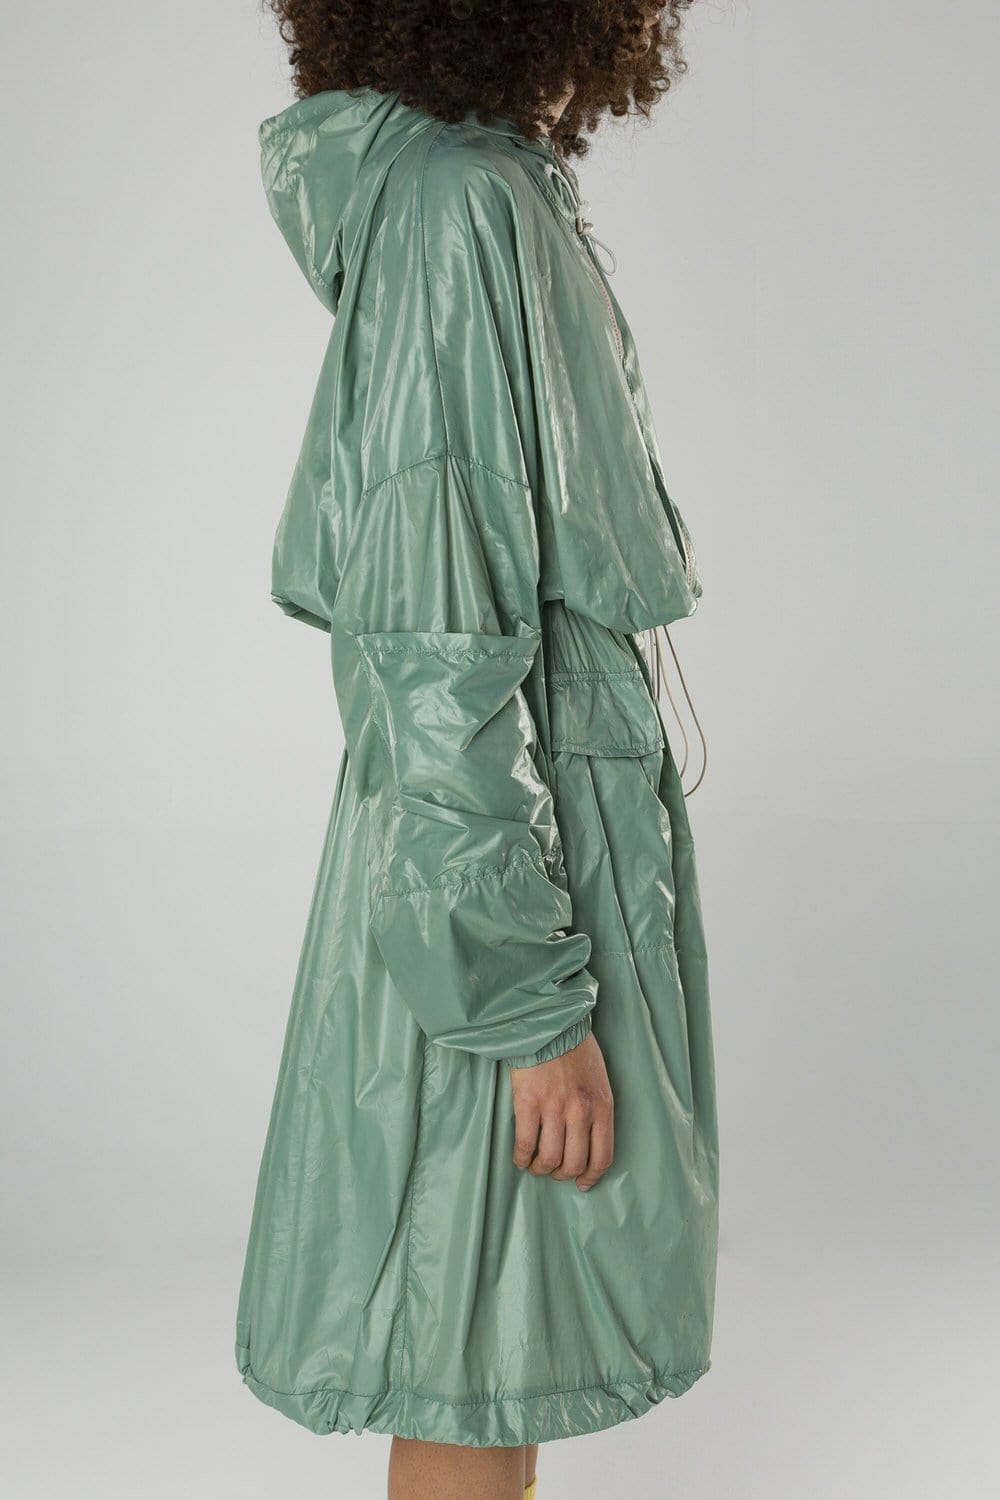 Green wave raincoat